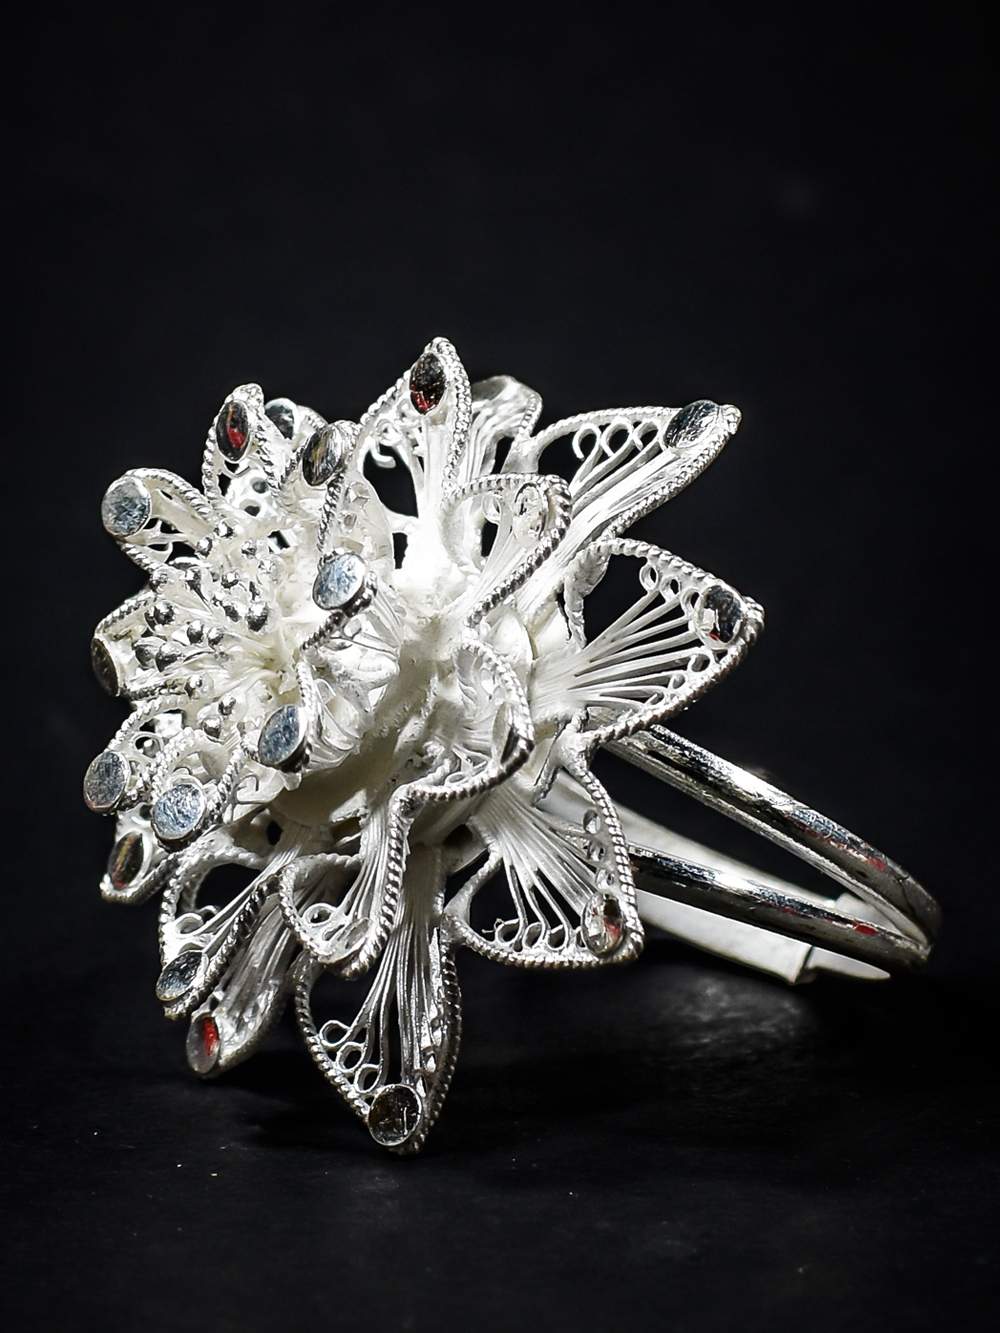 Natural Bronzite Gemstone 925 Sterling Silver Statement Ring Size 9 For  Women | eBay